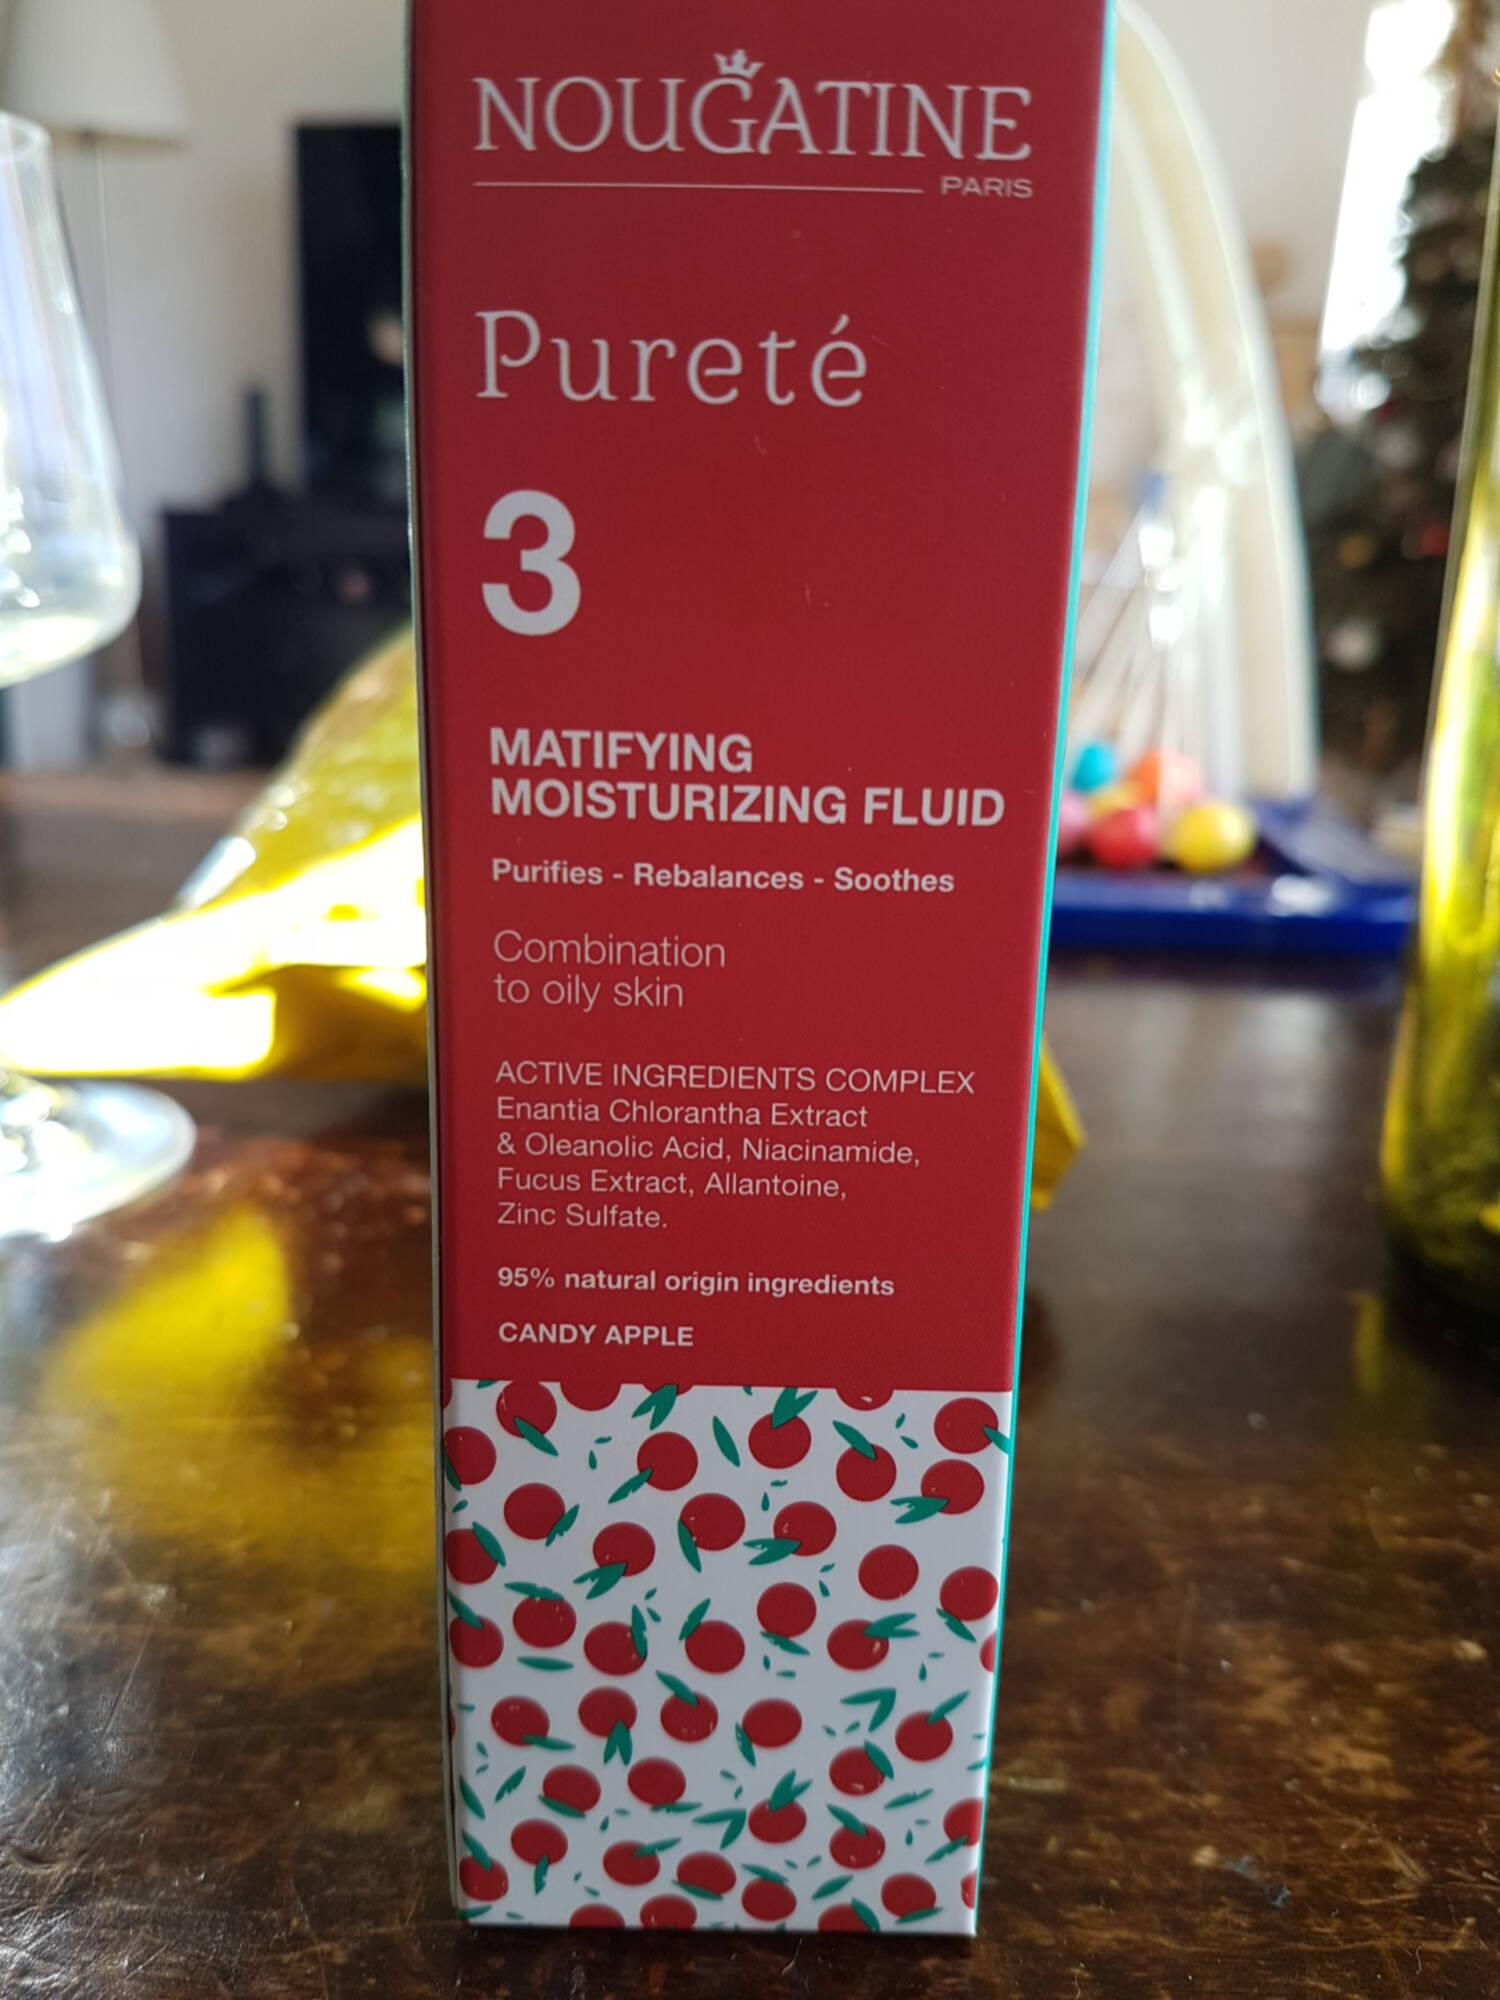 NOUGATINE - Pureté 3 - Matifying moisturizing fluid candy apple